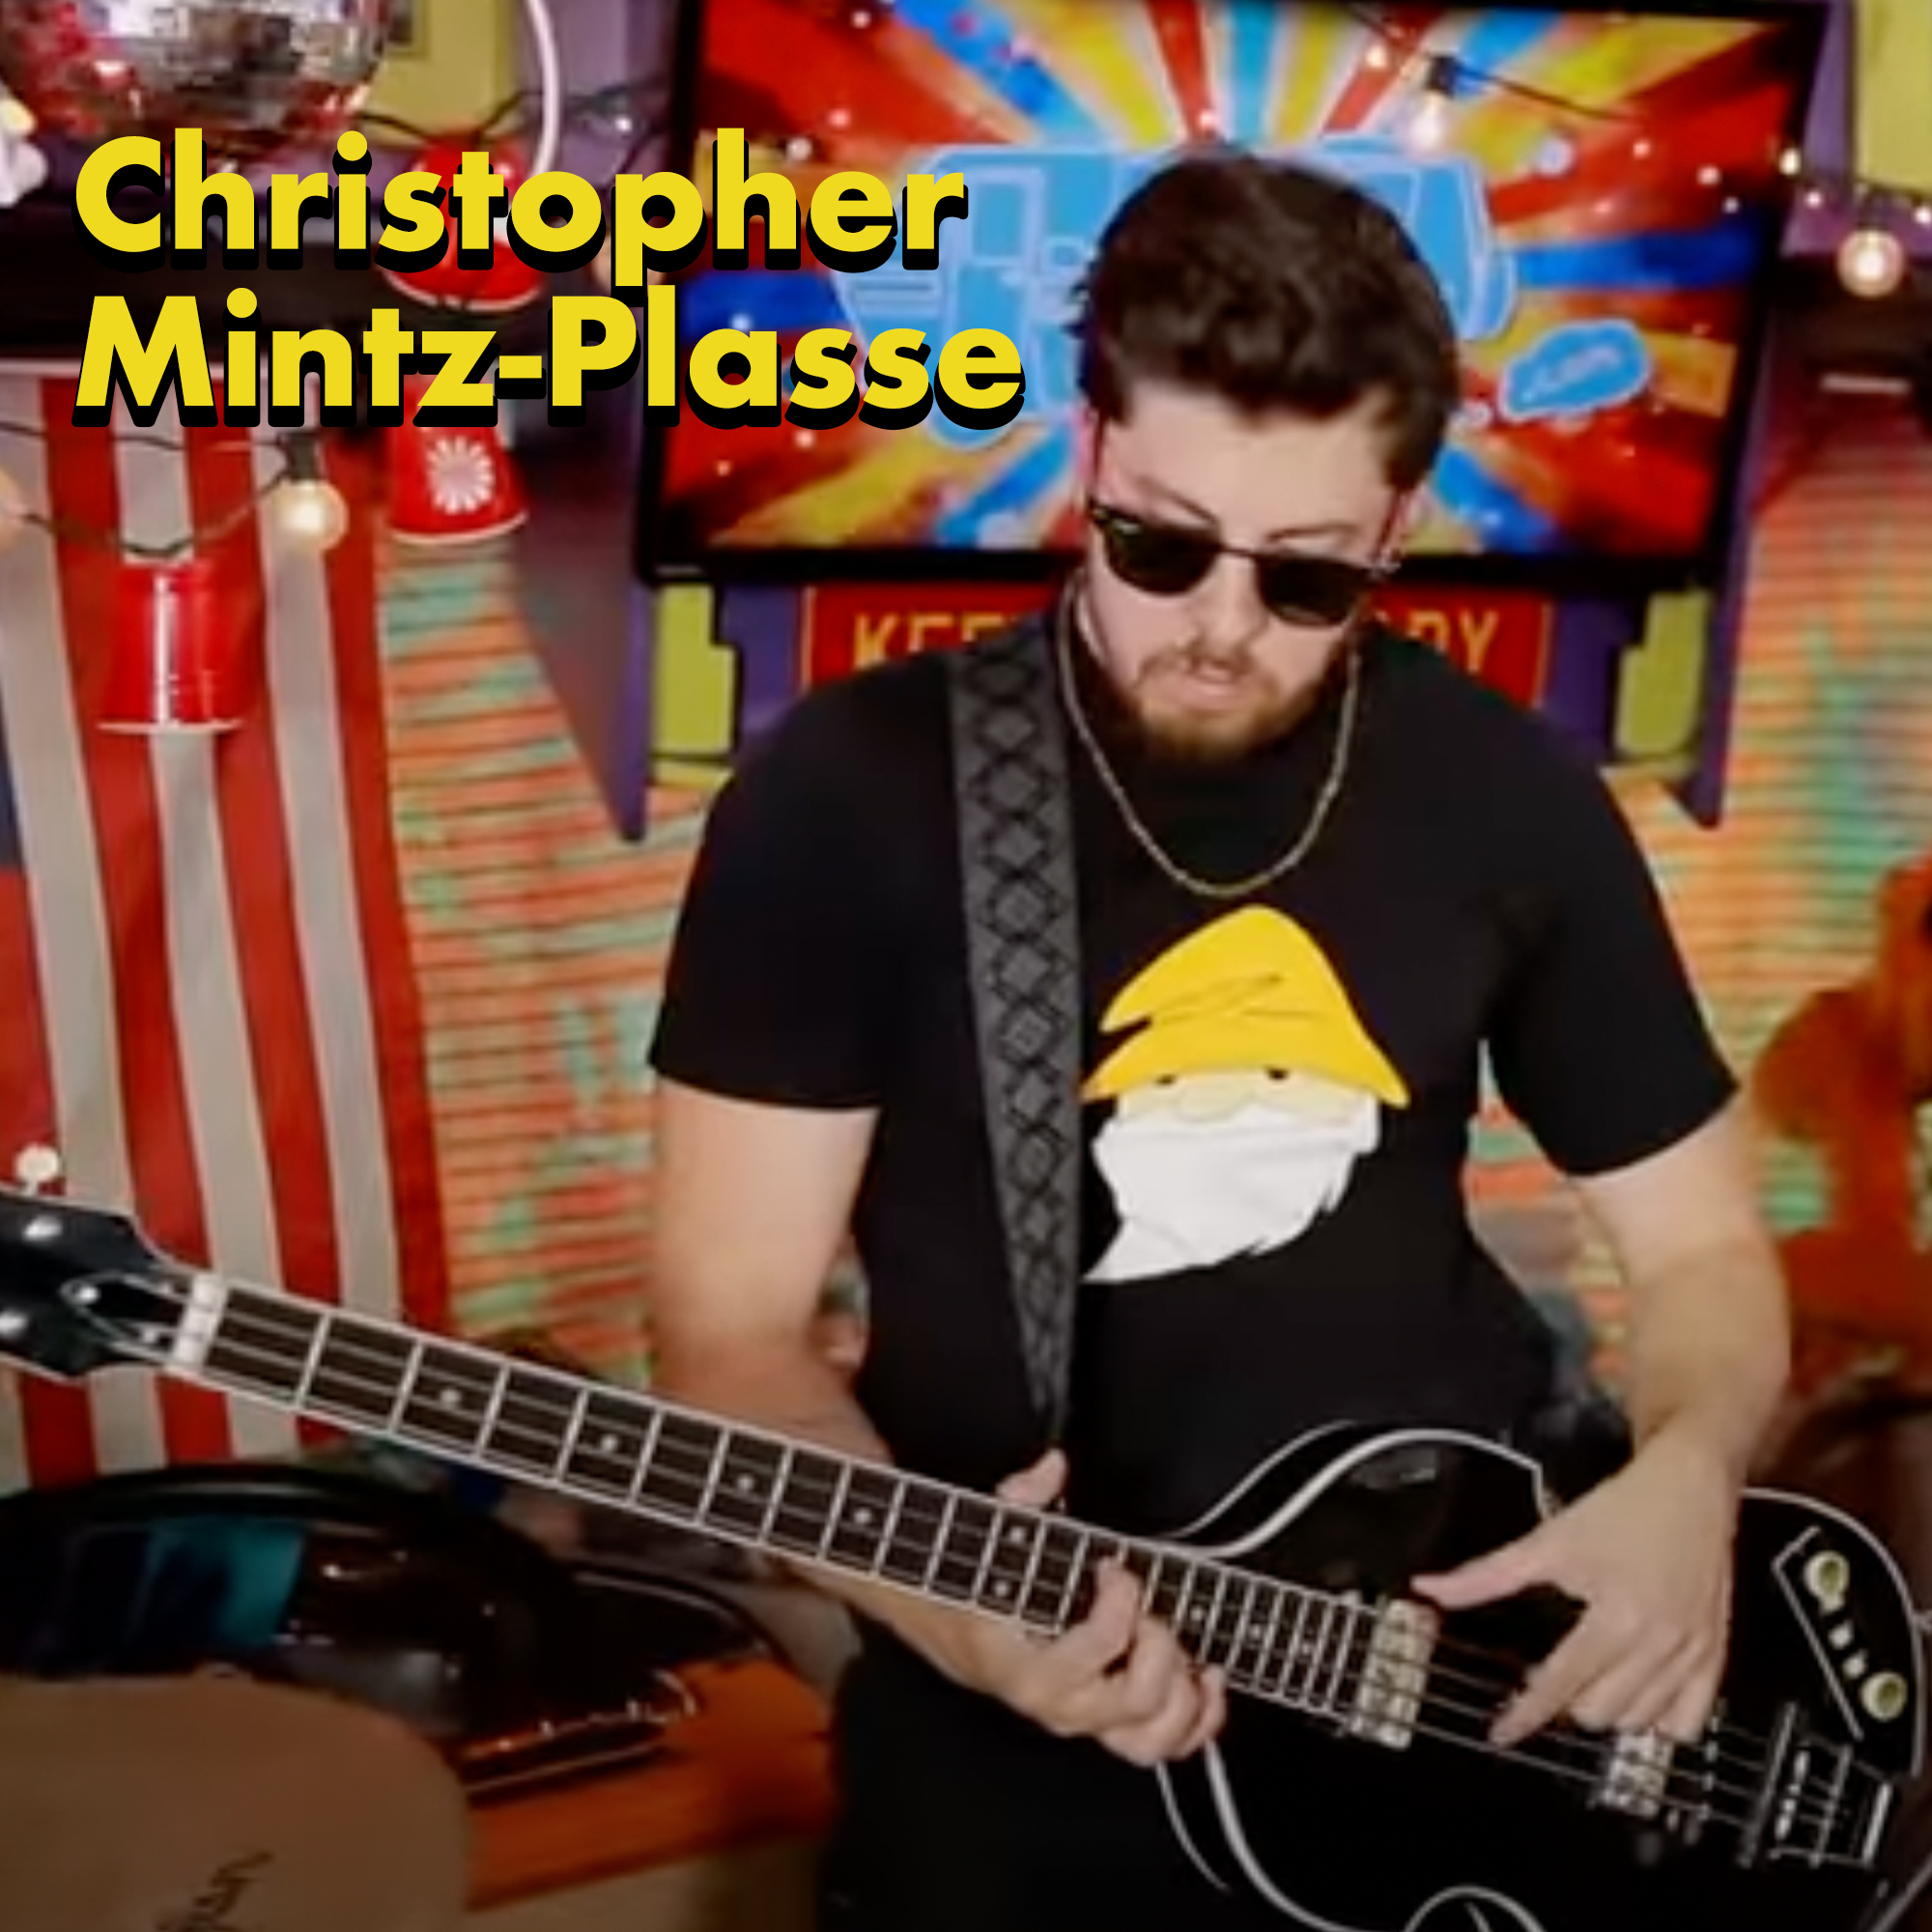 actors in bands - guitarist - Christopher MintzPlasse vre . a..